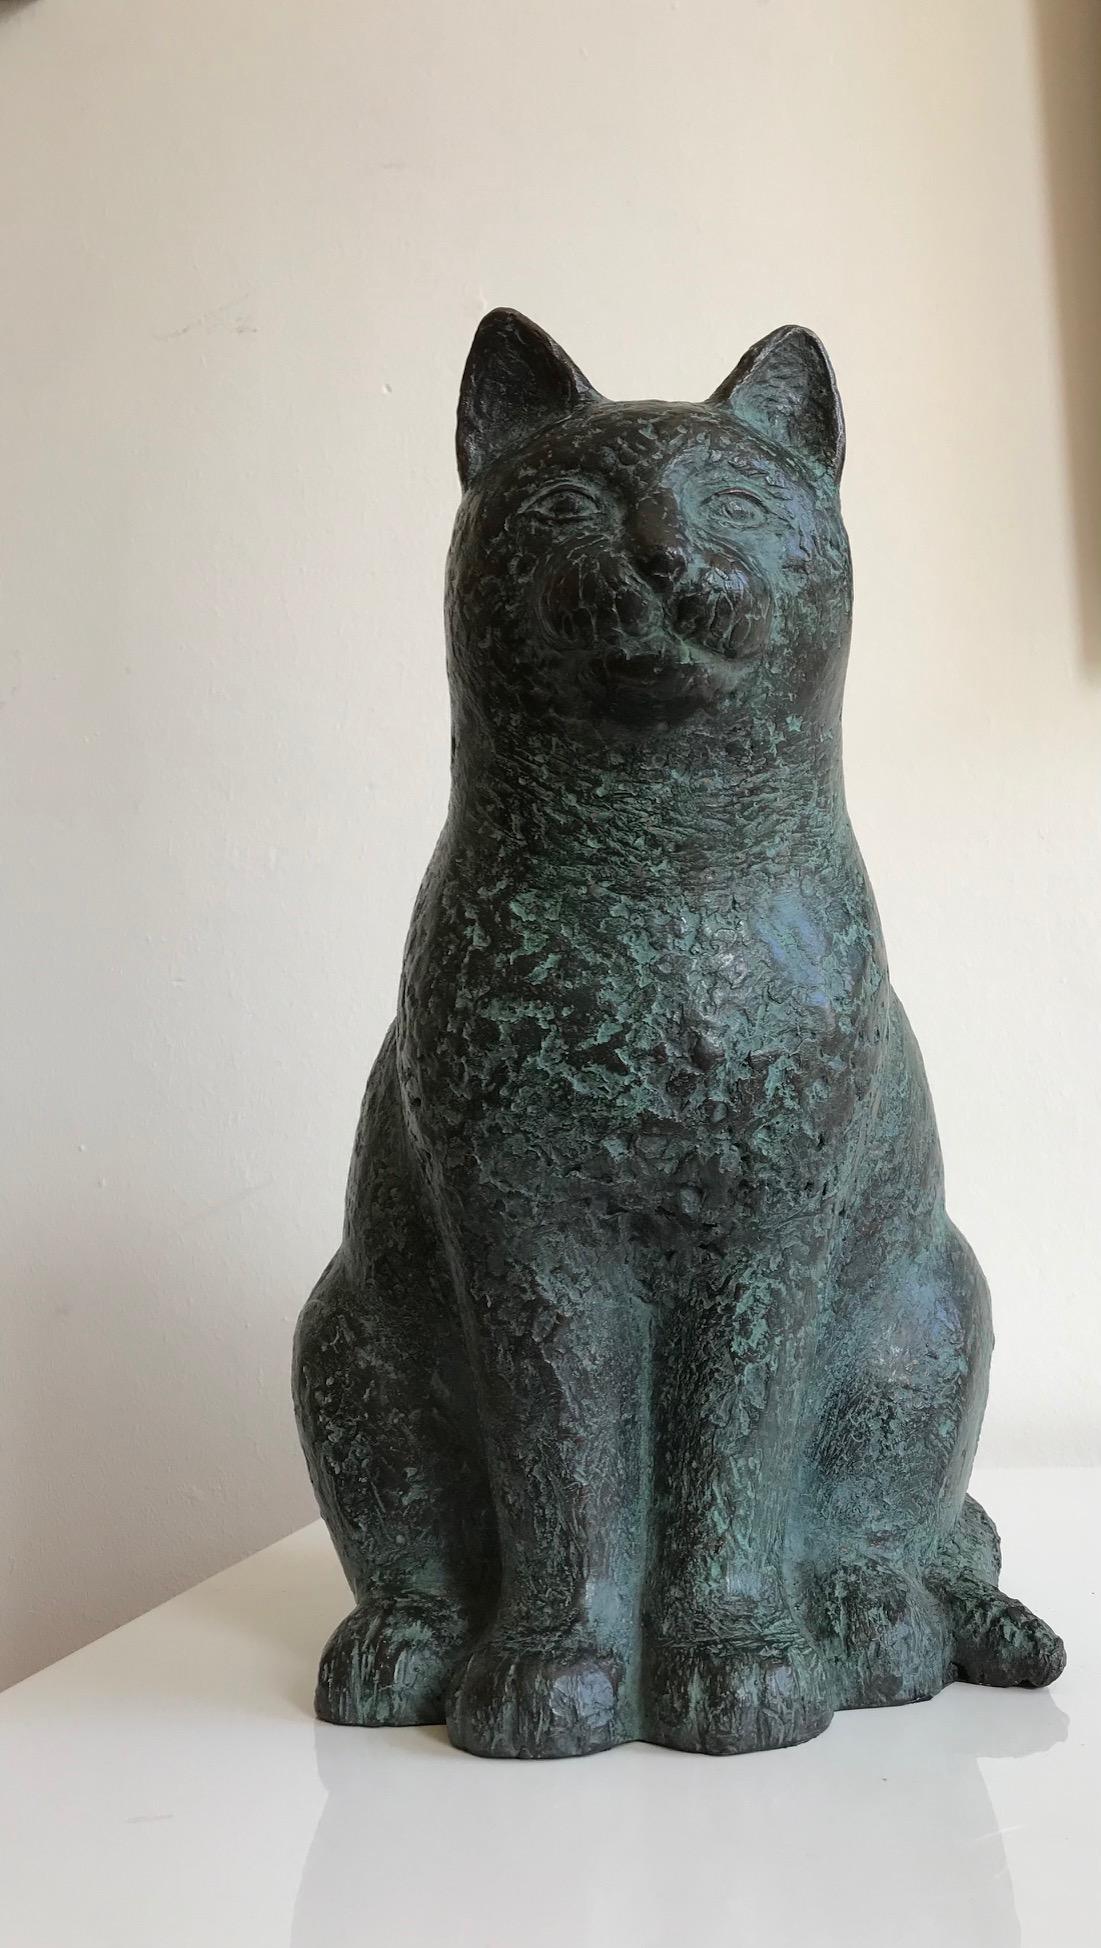 Figurative Sculpture Karin Beek - ''Chat assis'' Sculpture en bronze contemporaine hollandaise de chat, félin